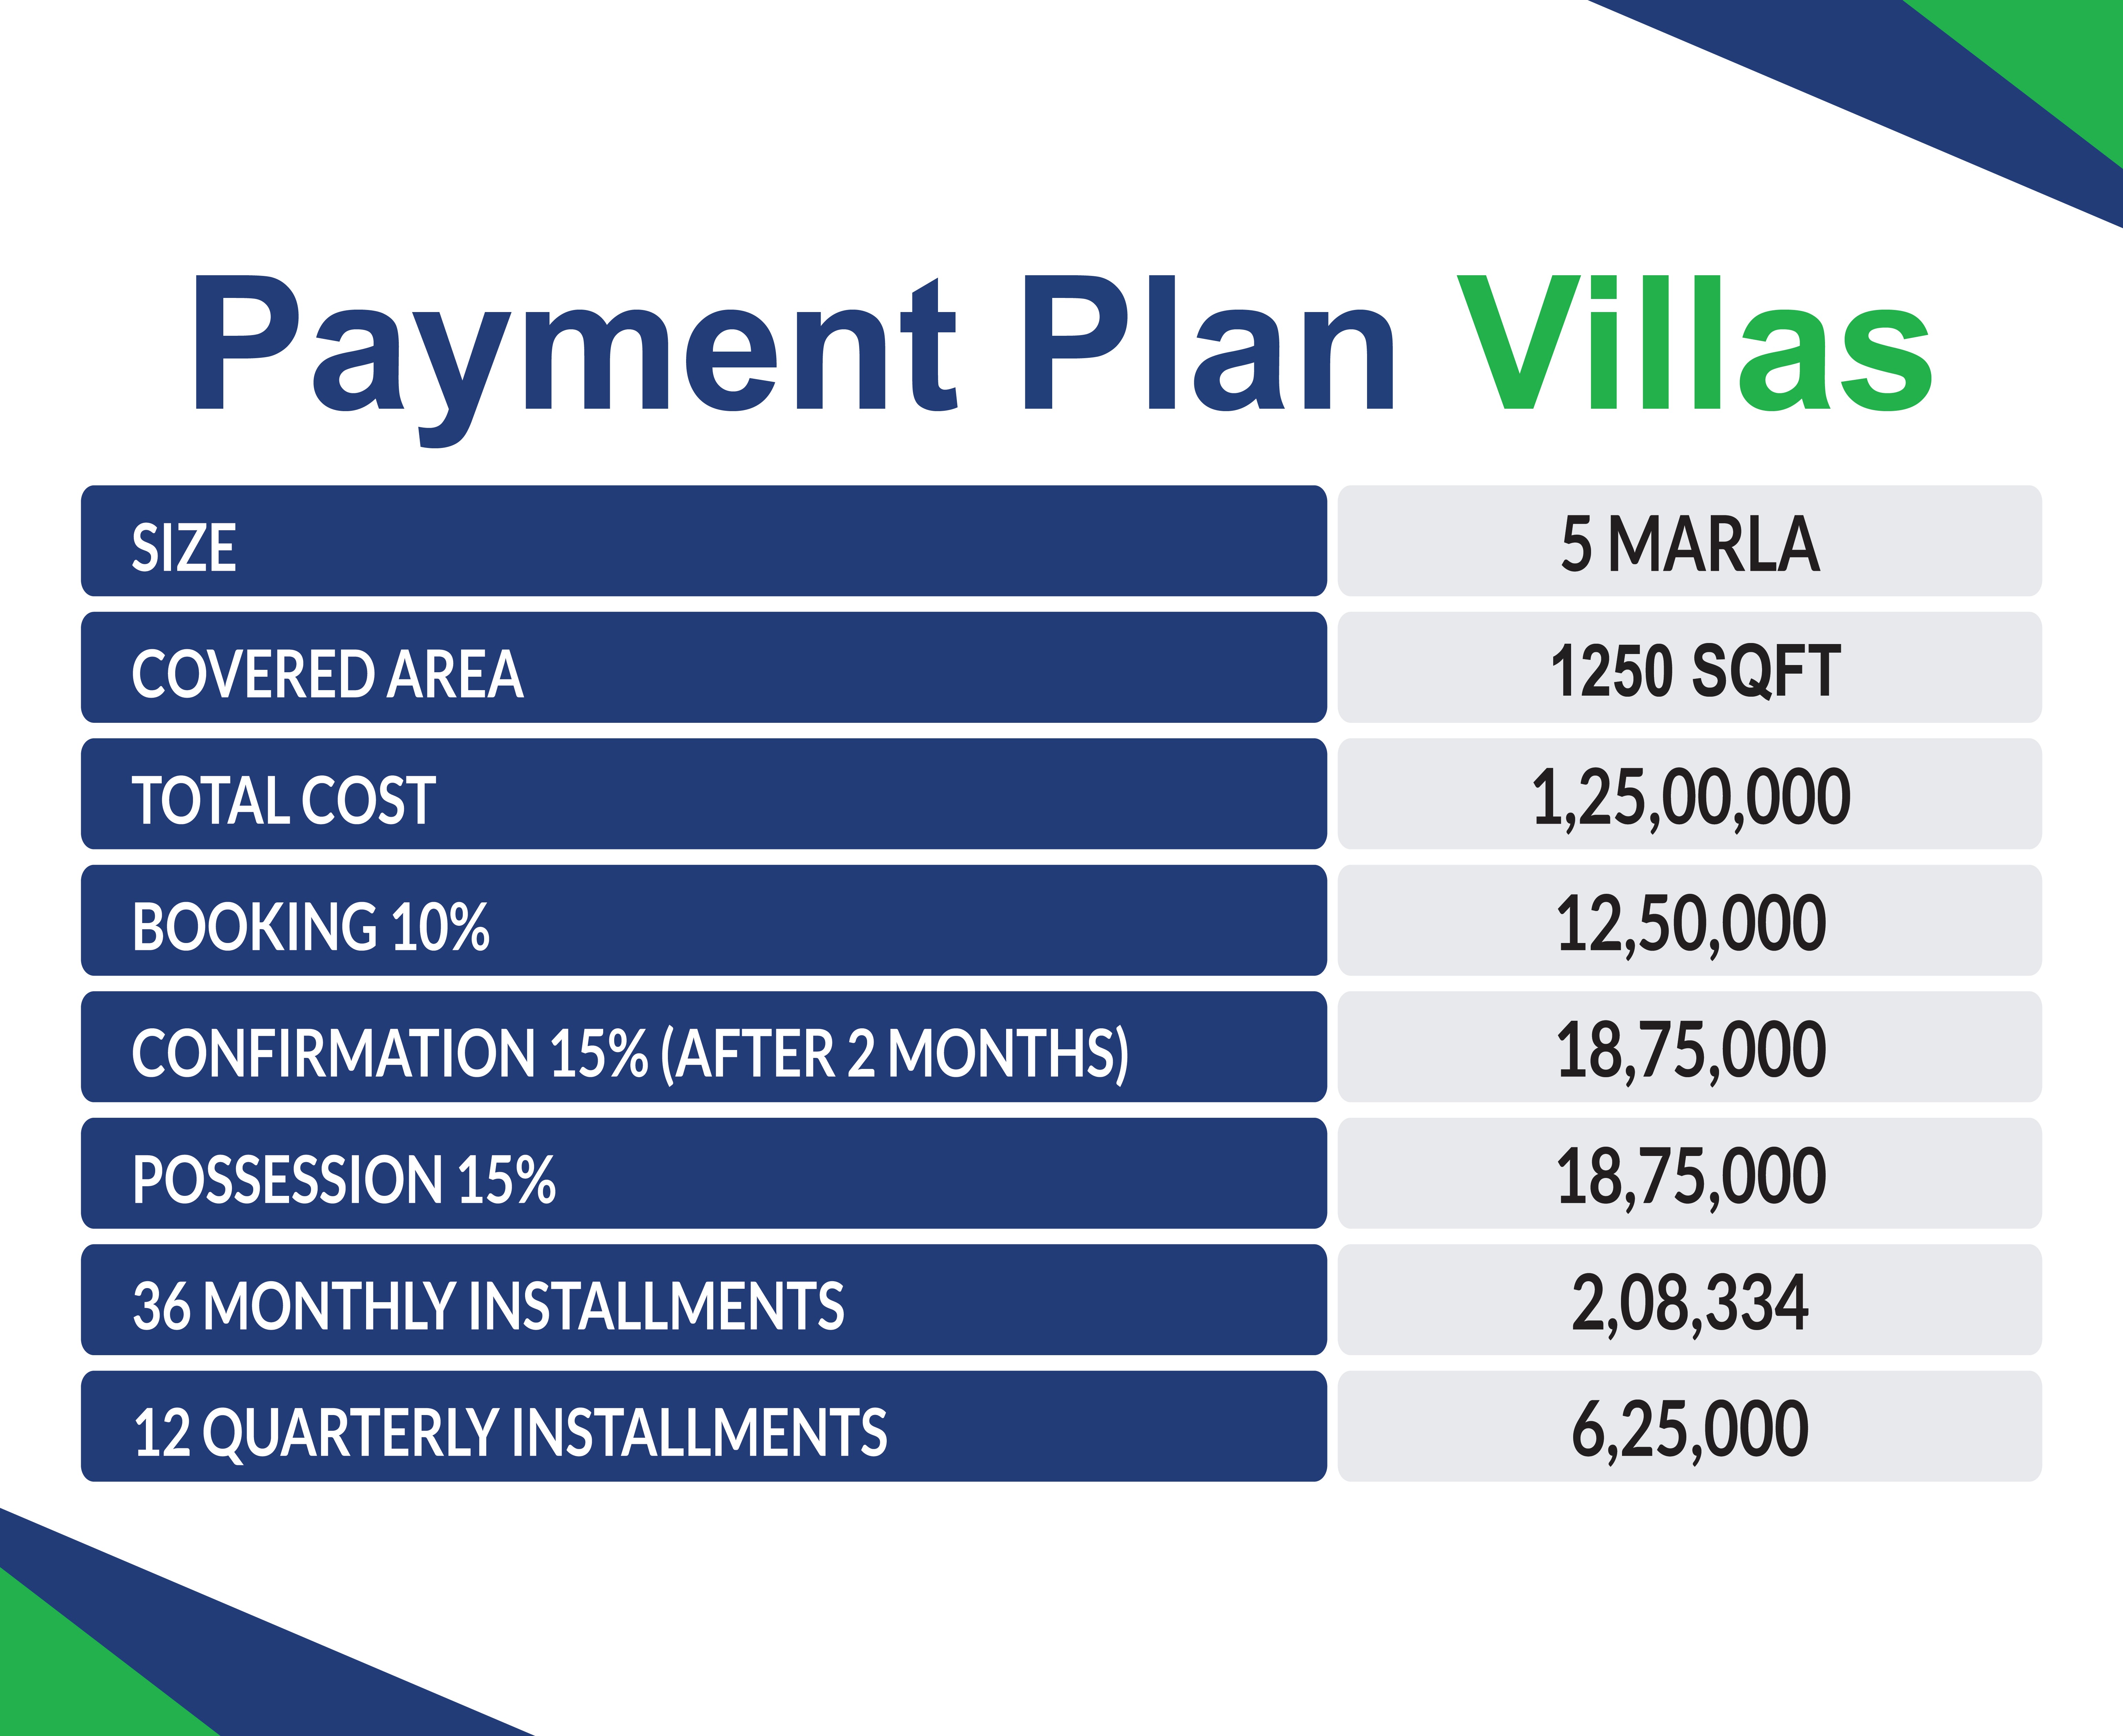 Hospitality Park Villas payments plan, Hospitality Park new murree, fast marketing consultants